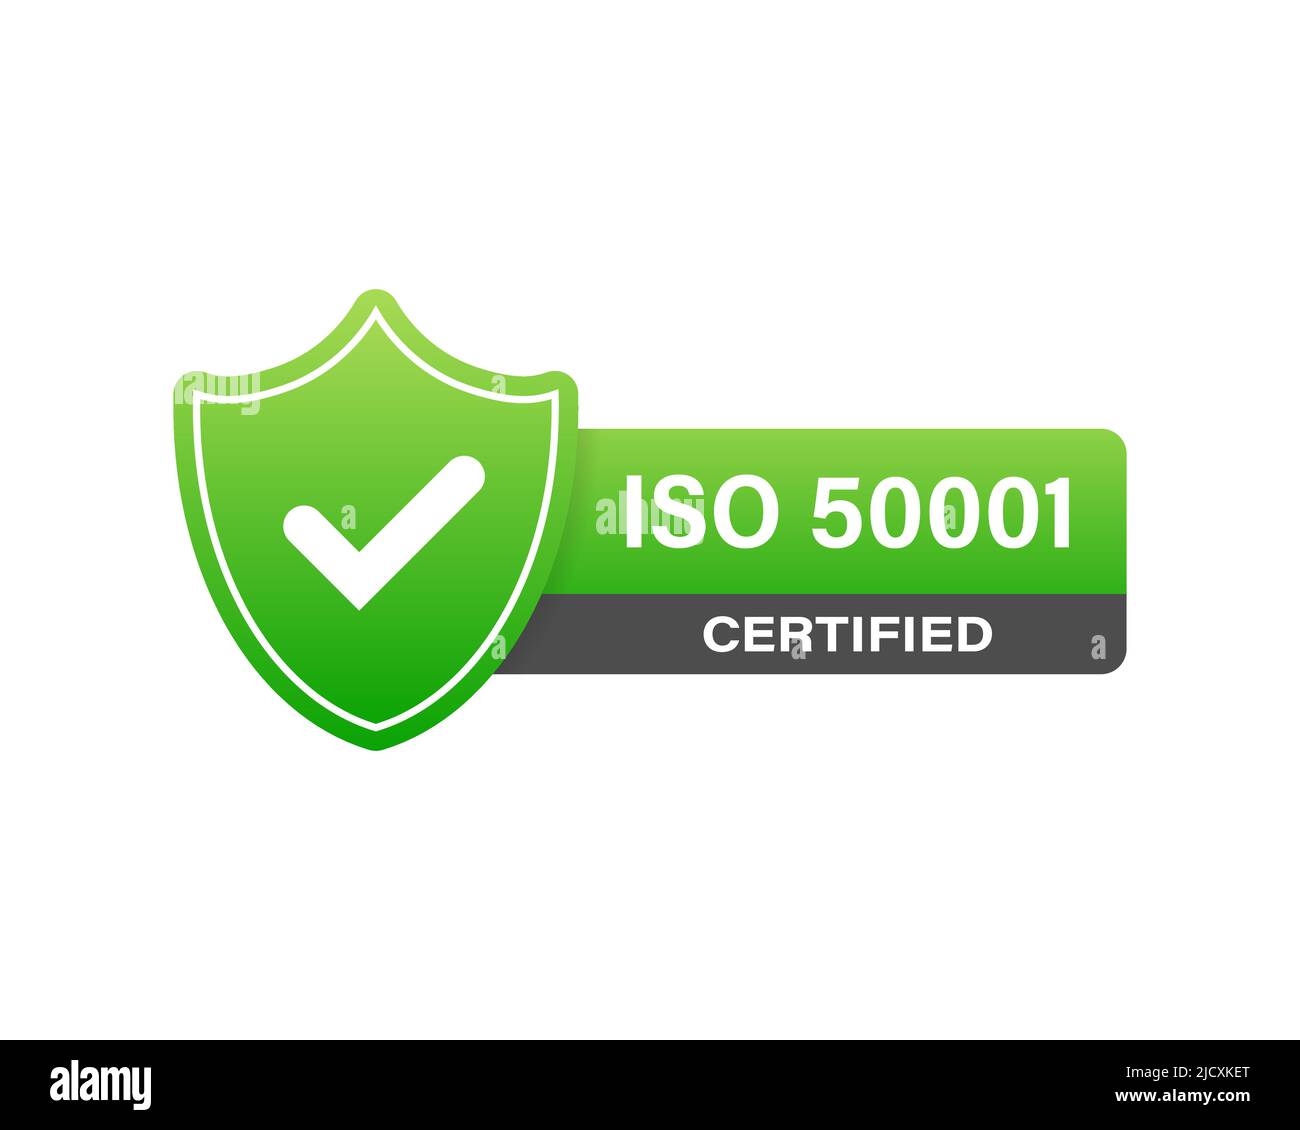 ISO 50001 Zertifikat Abzeichen - Energiemanagement. Vektorgrafik Stock Vektor